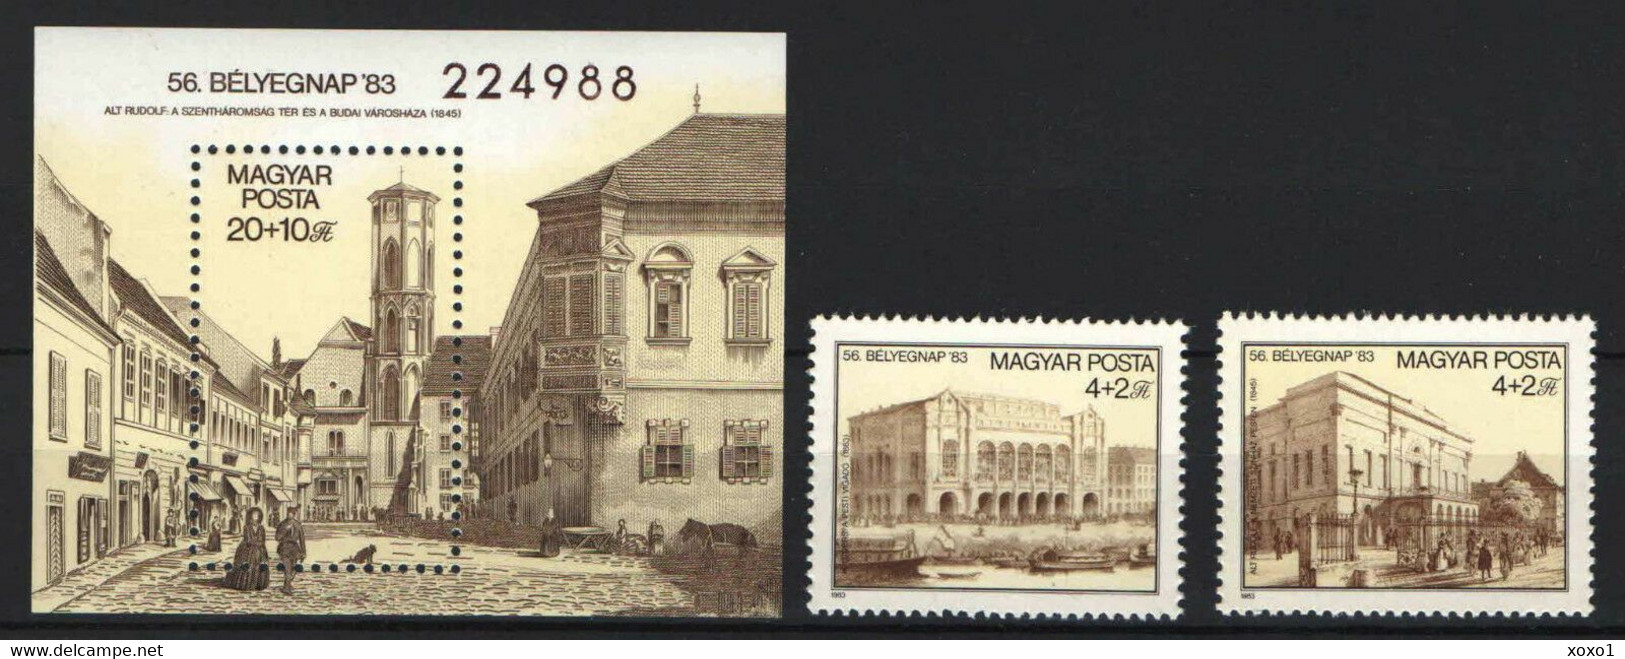 Hungary 1983 MiNr. 3632 - 3634(Block 166) Ungarn Philately Stamp's Day, Architecture, Engraving 2v + S\sh MNH ** 7.40 € - Grabados